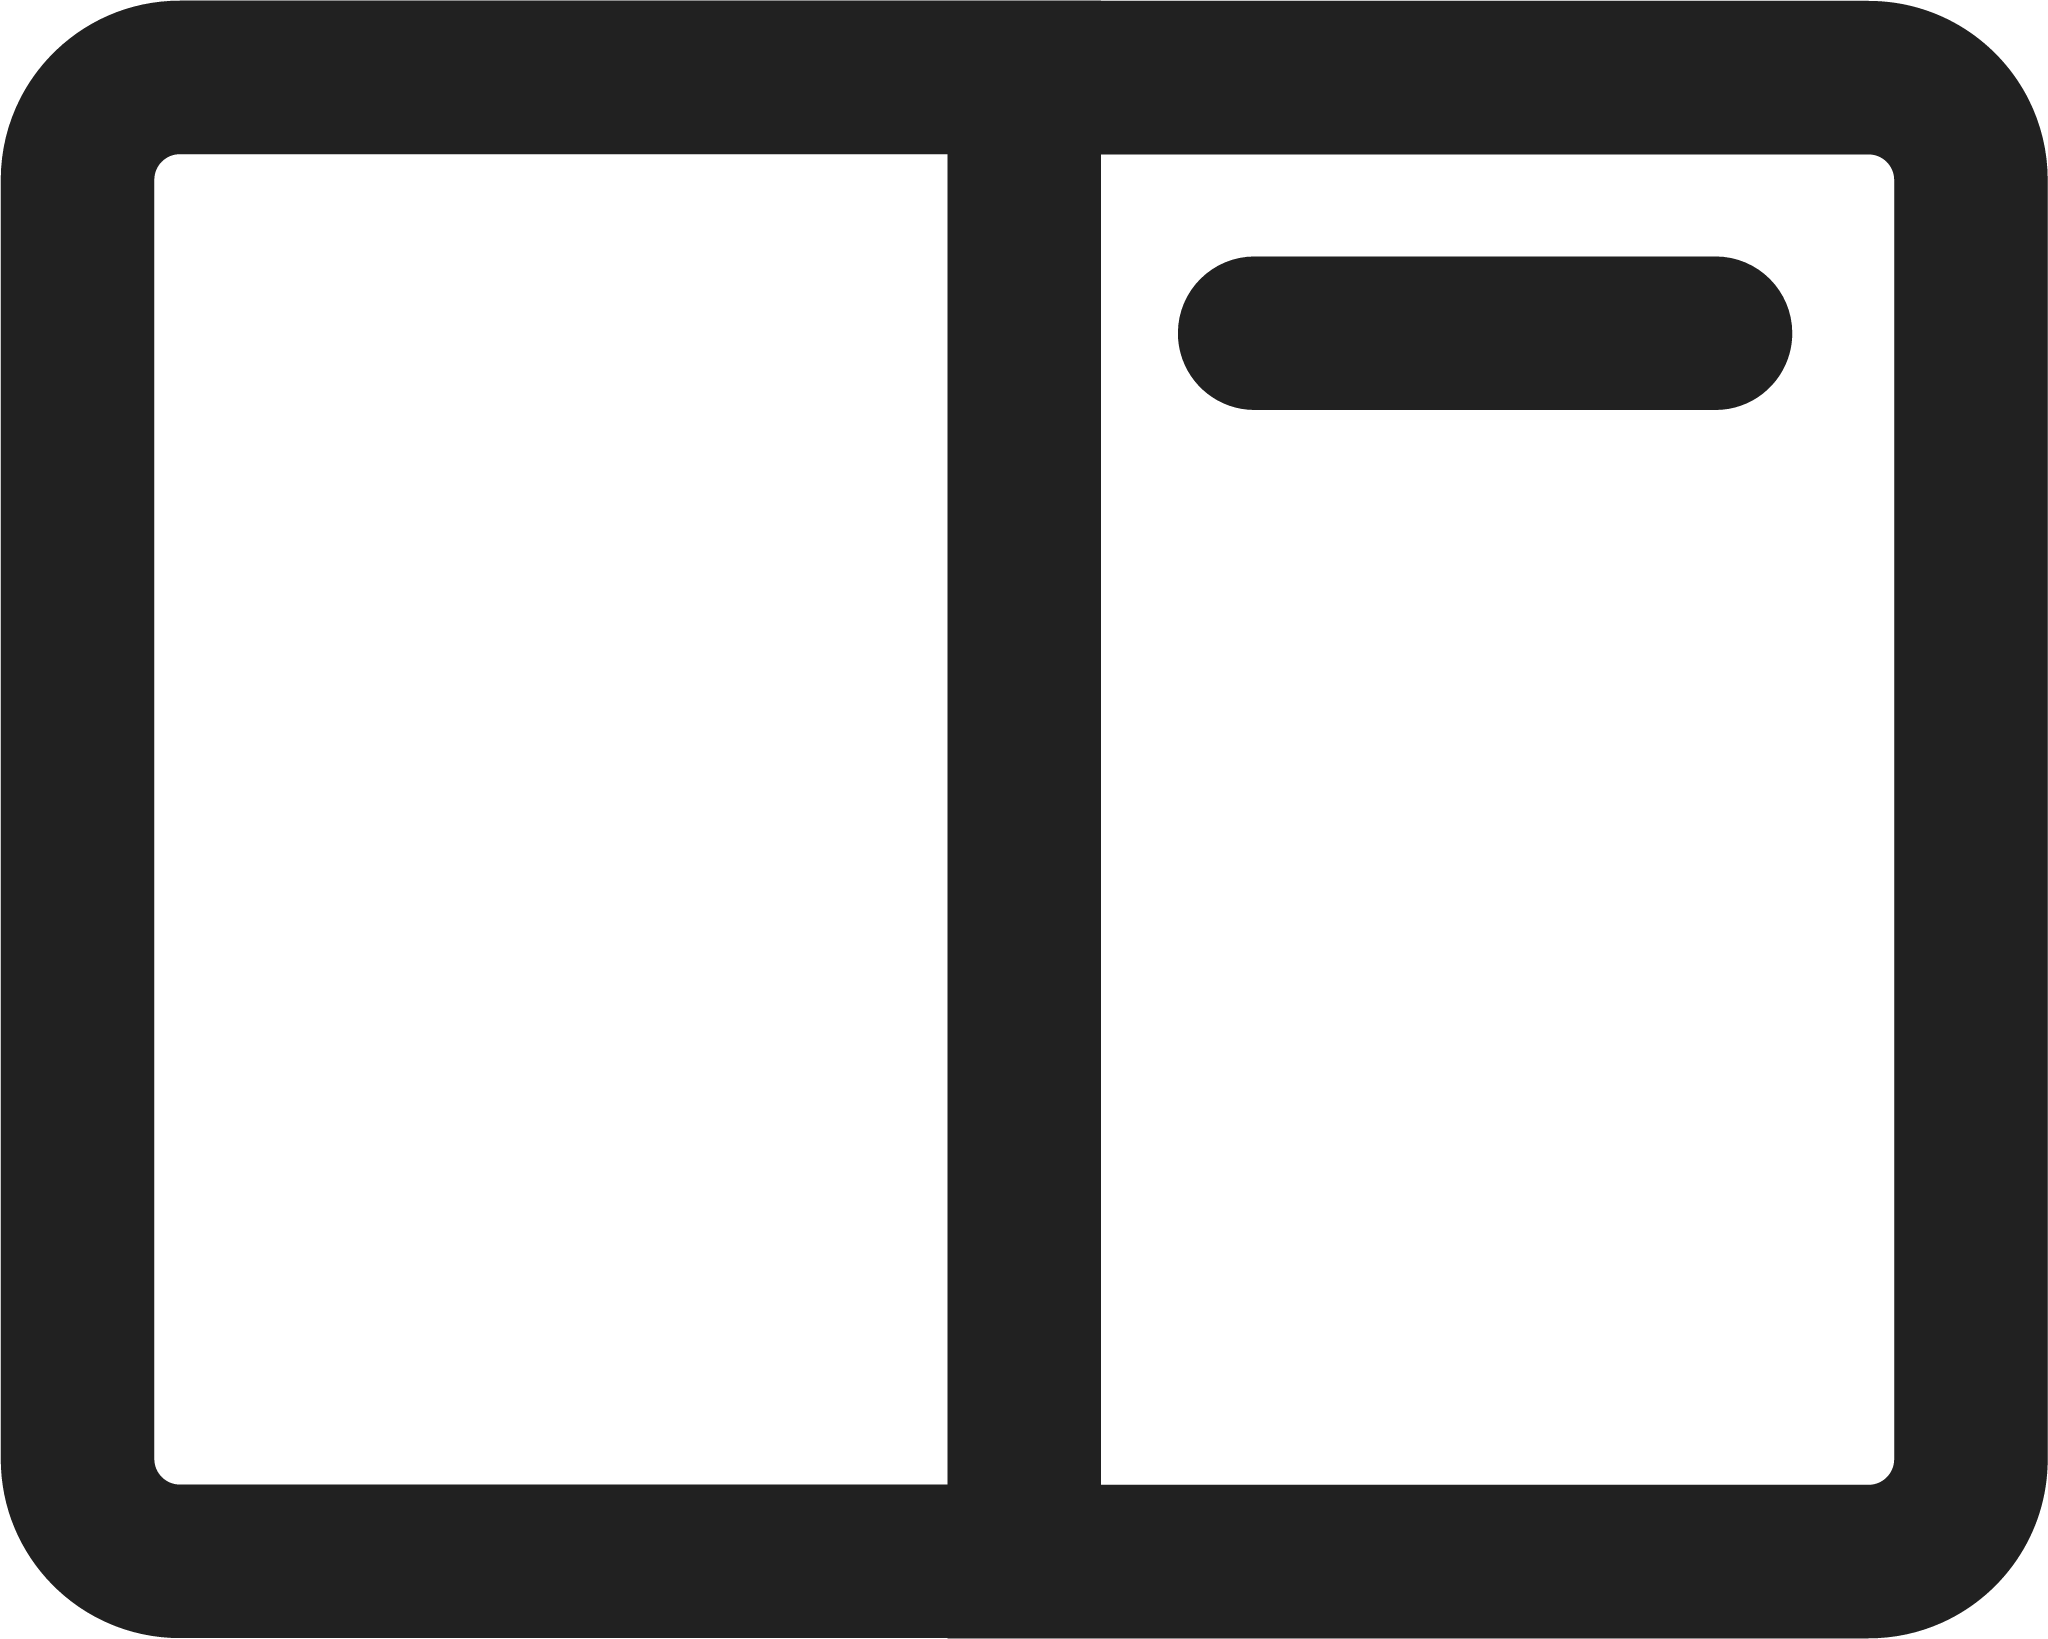 Dual Screen Status Bar icon